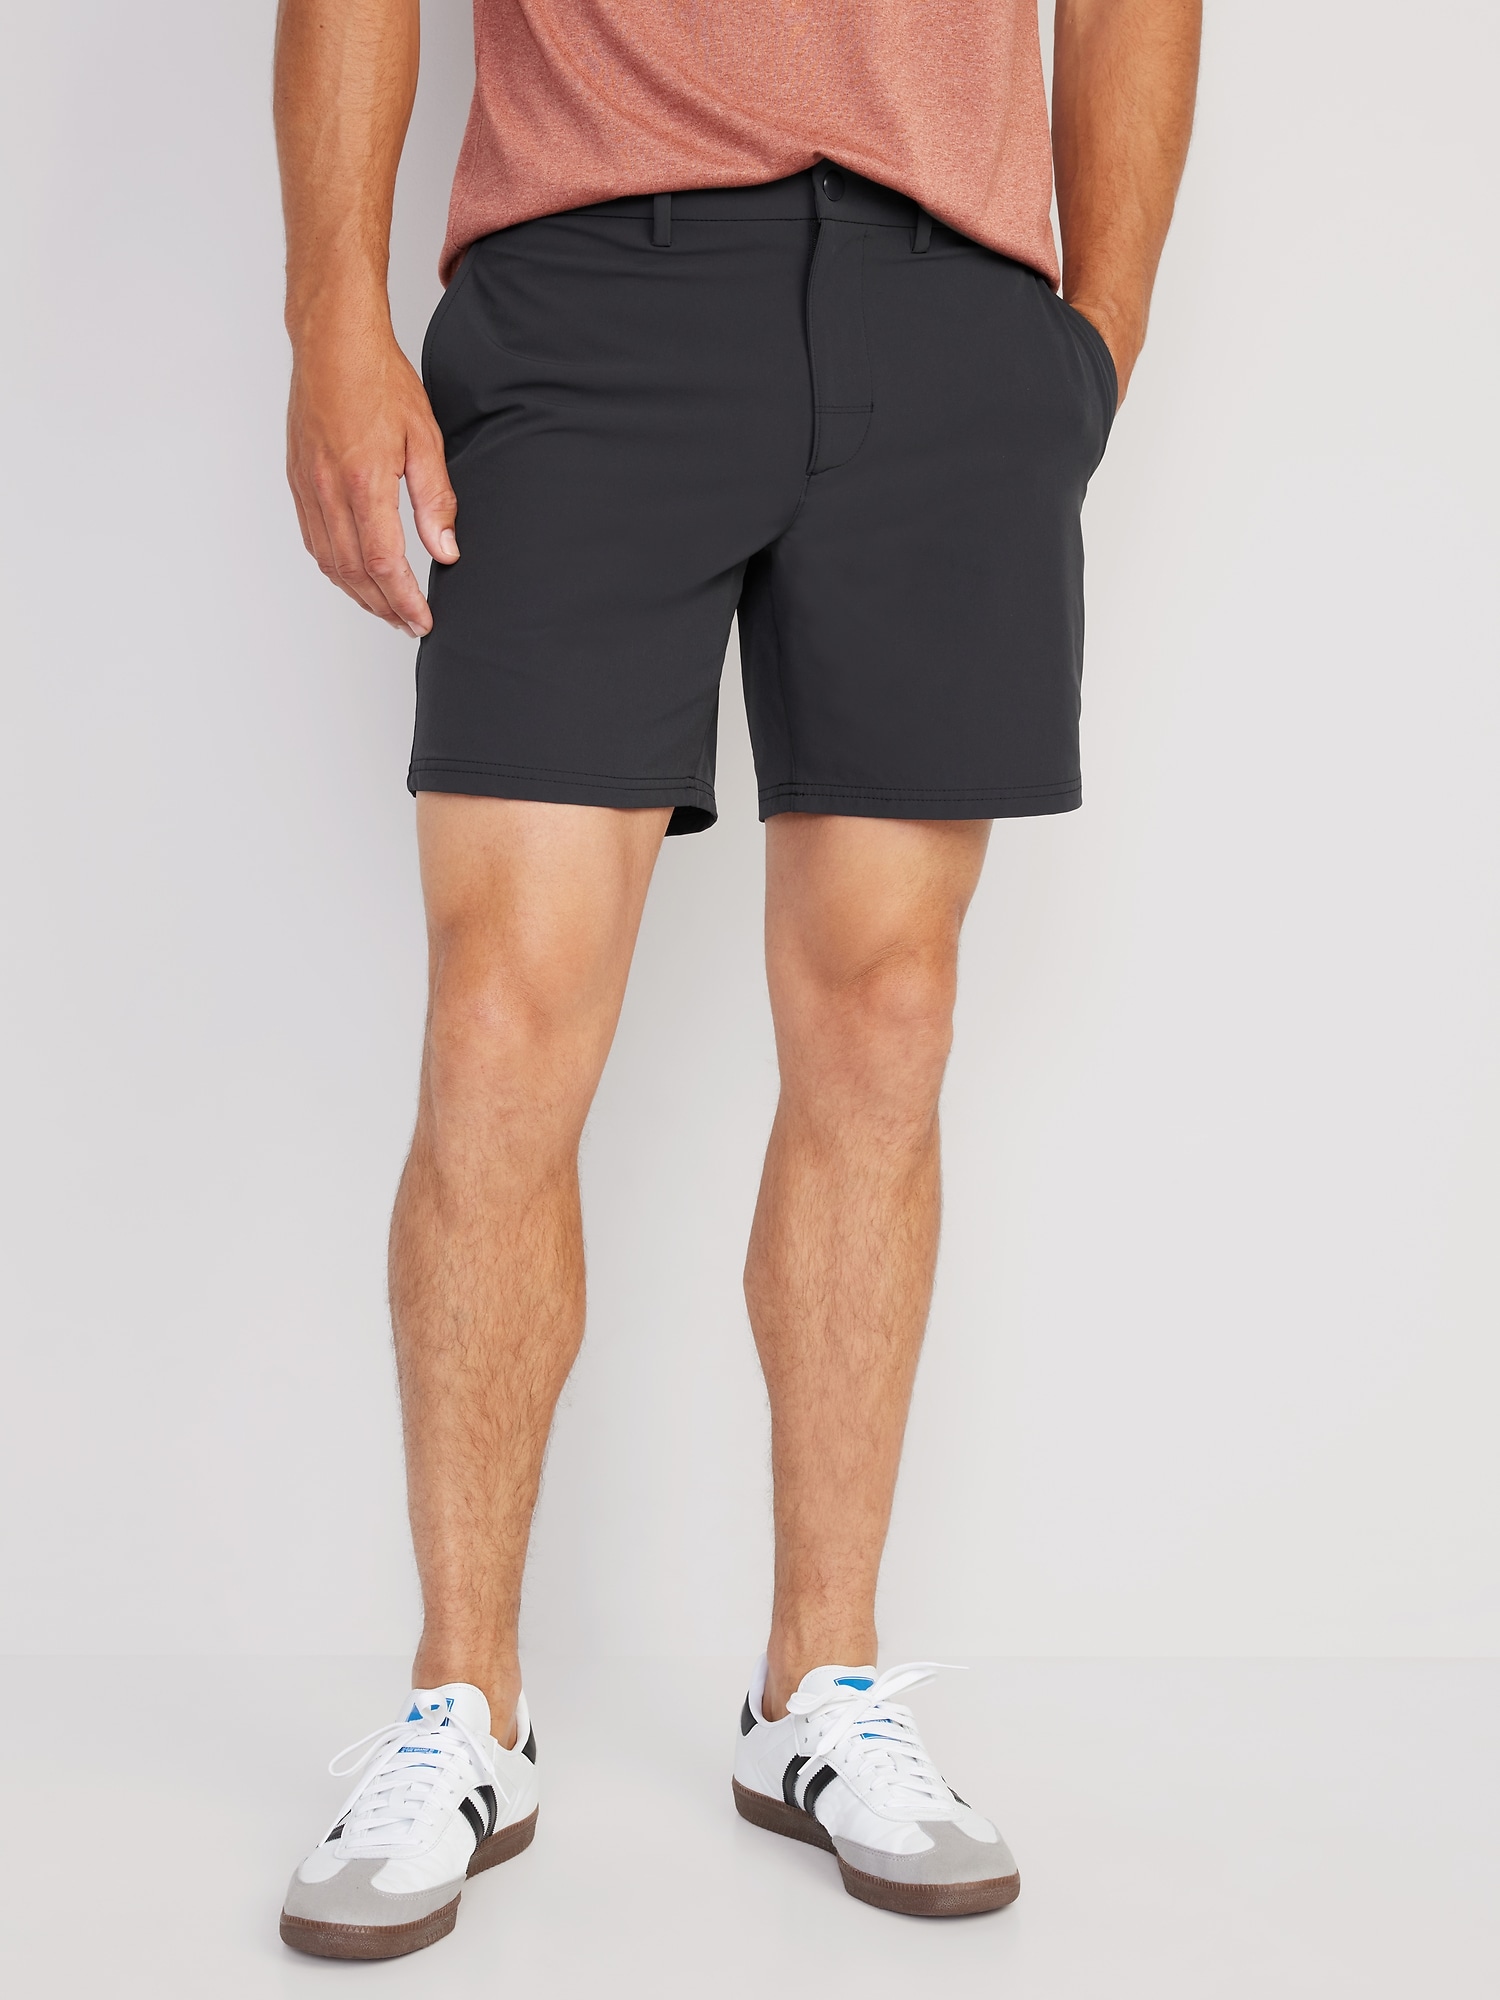 StretchTech Nylon Chino Shorts -- 7-inch inseam